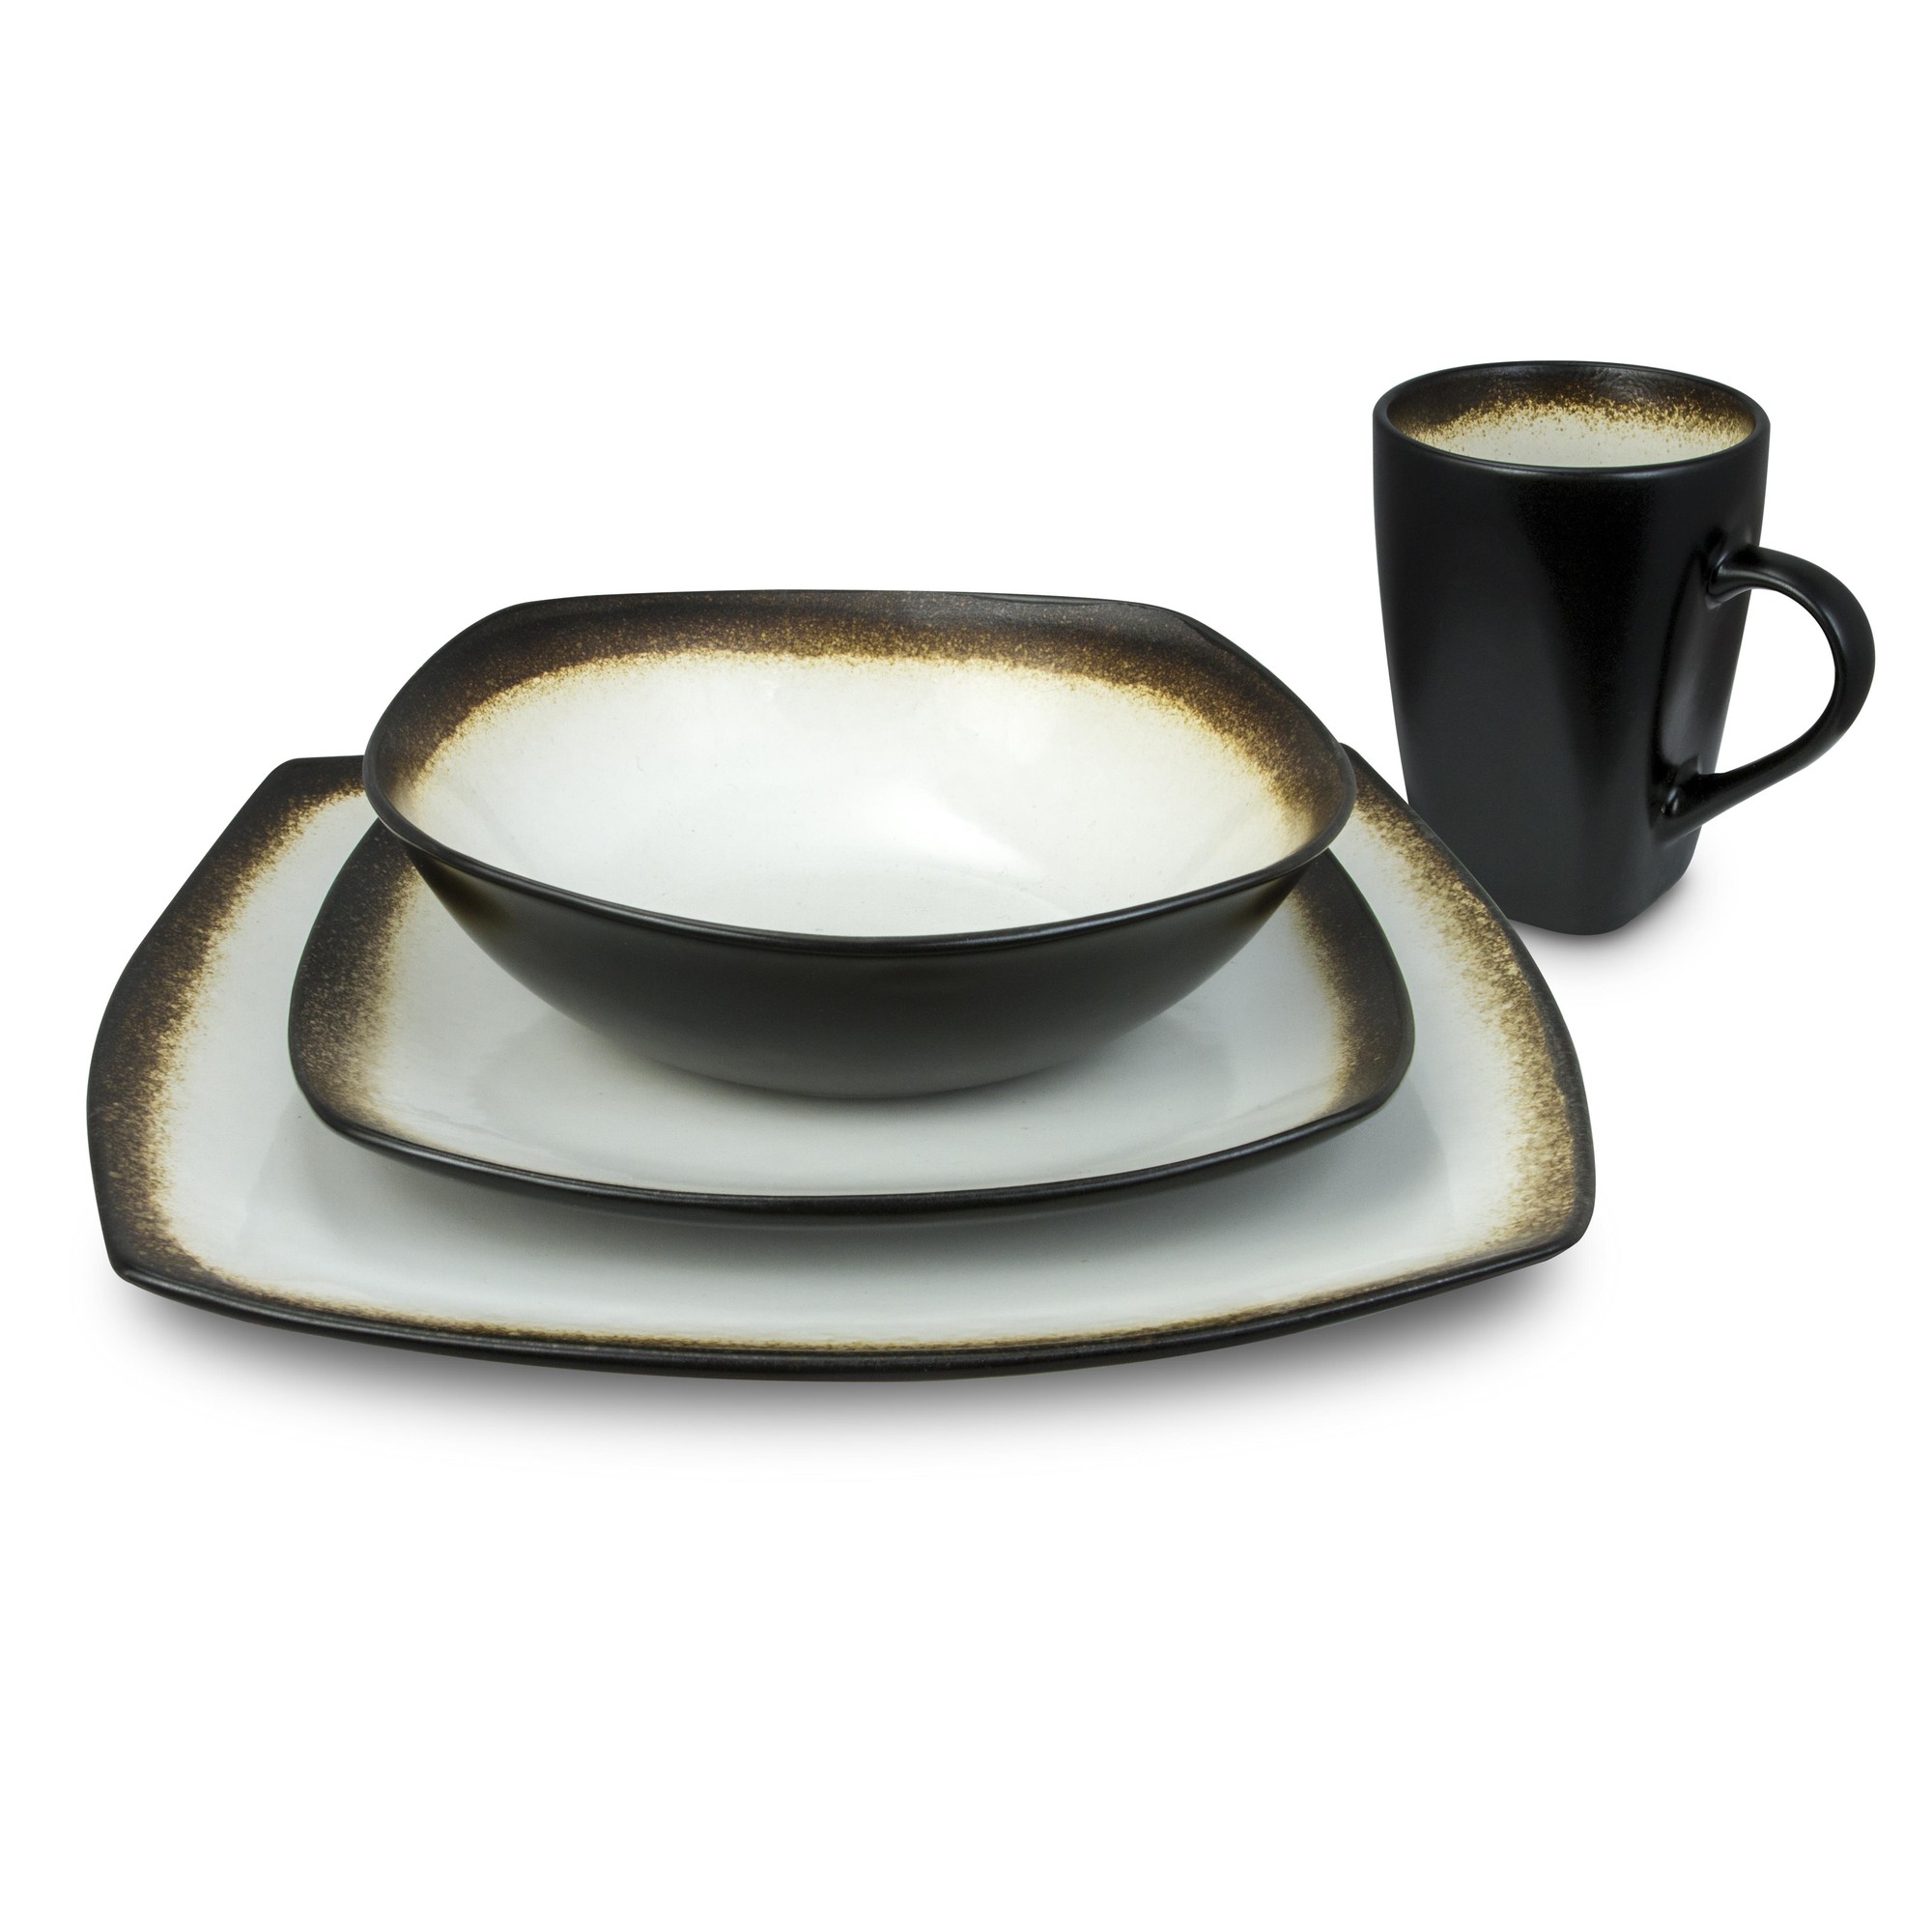 Kalorik Haus 16-Piece Brown and White Dinnerware Set - curved edges